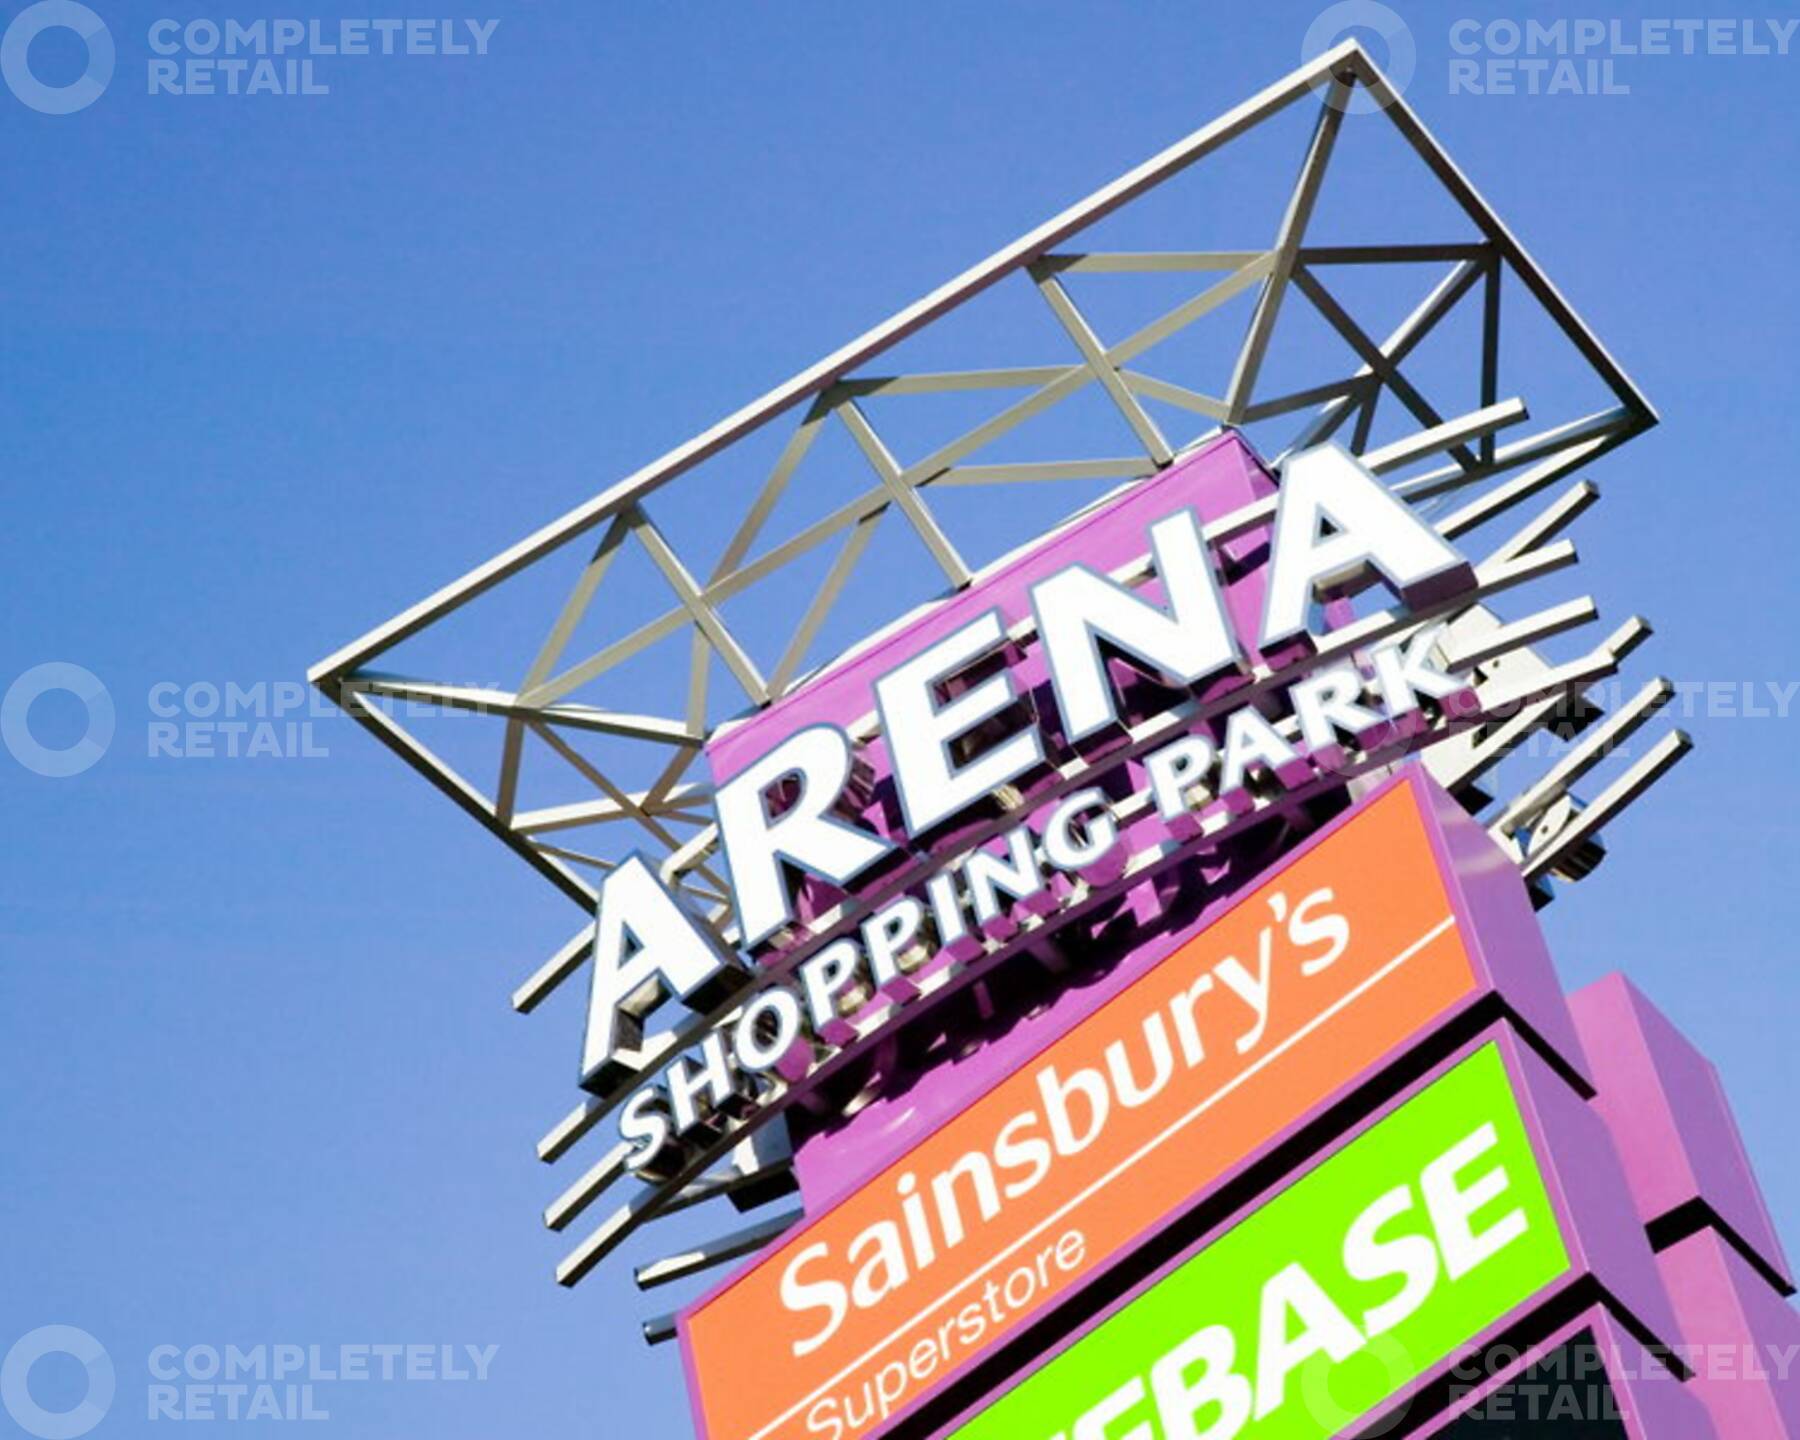 Arena Shopping Park